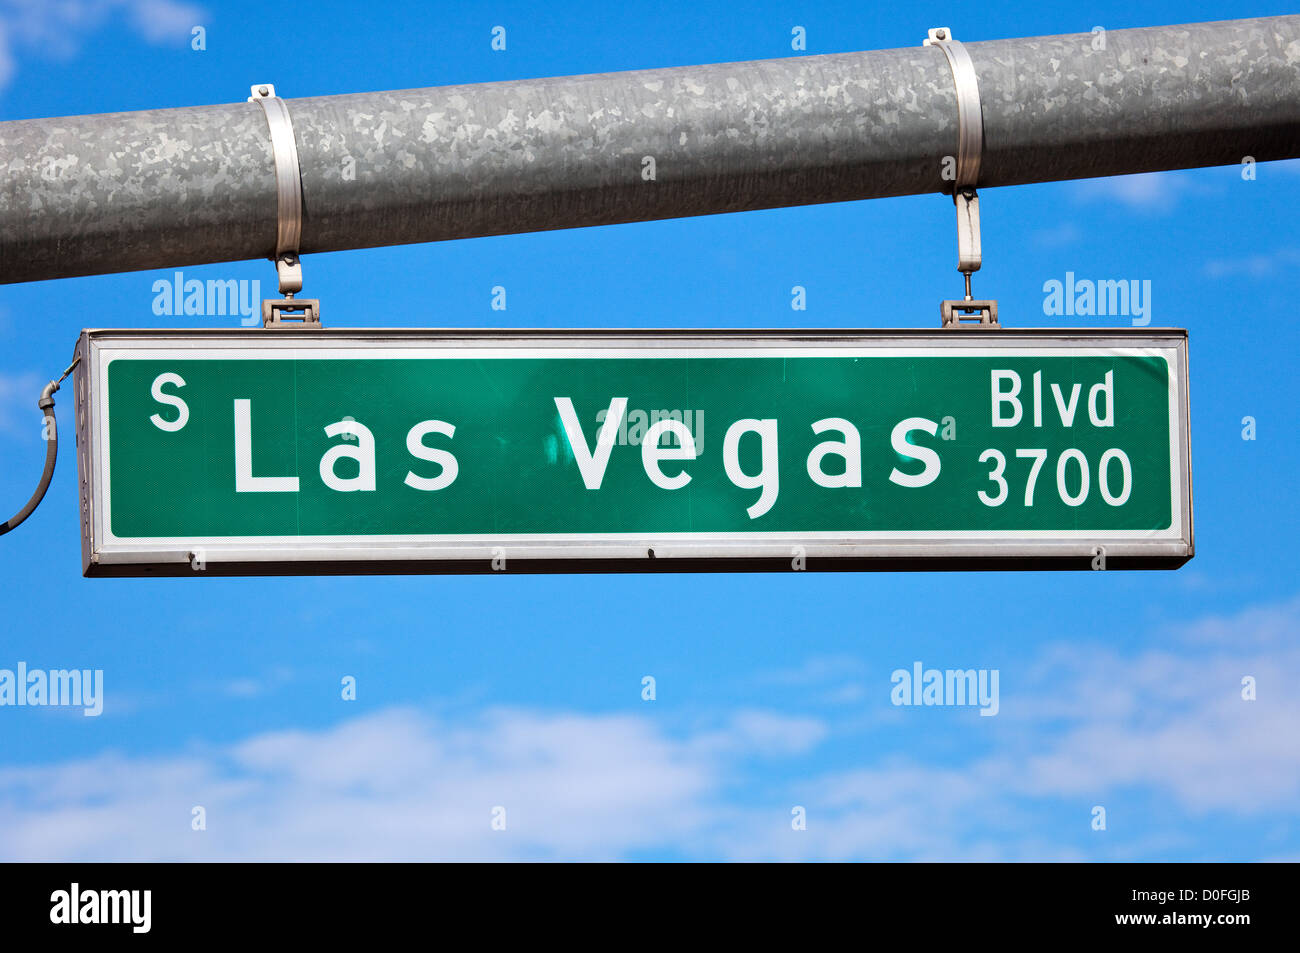 Las Vegas Blvd Road Sign, Las Vegas Stock Photo